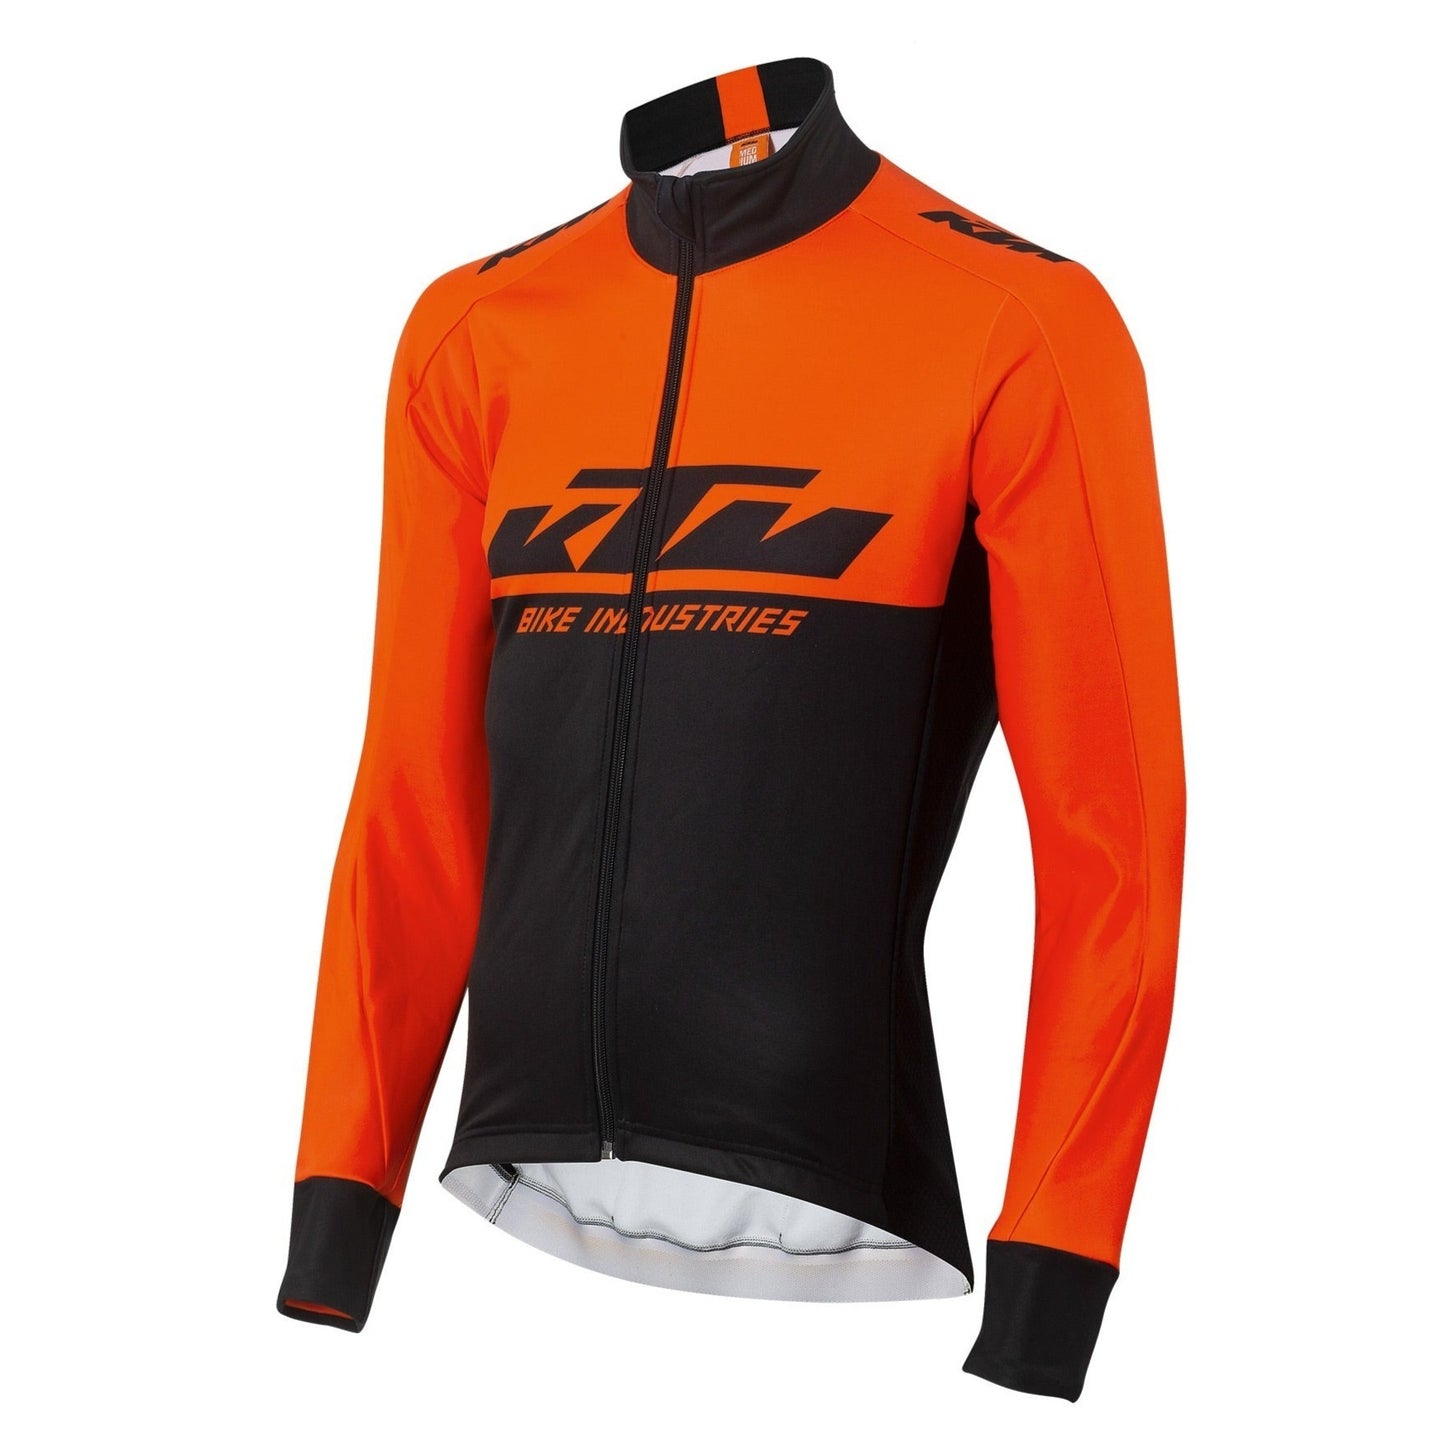 Jersey ciclismo KTM Race invierno -factory team